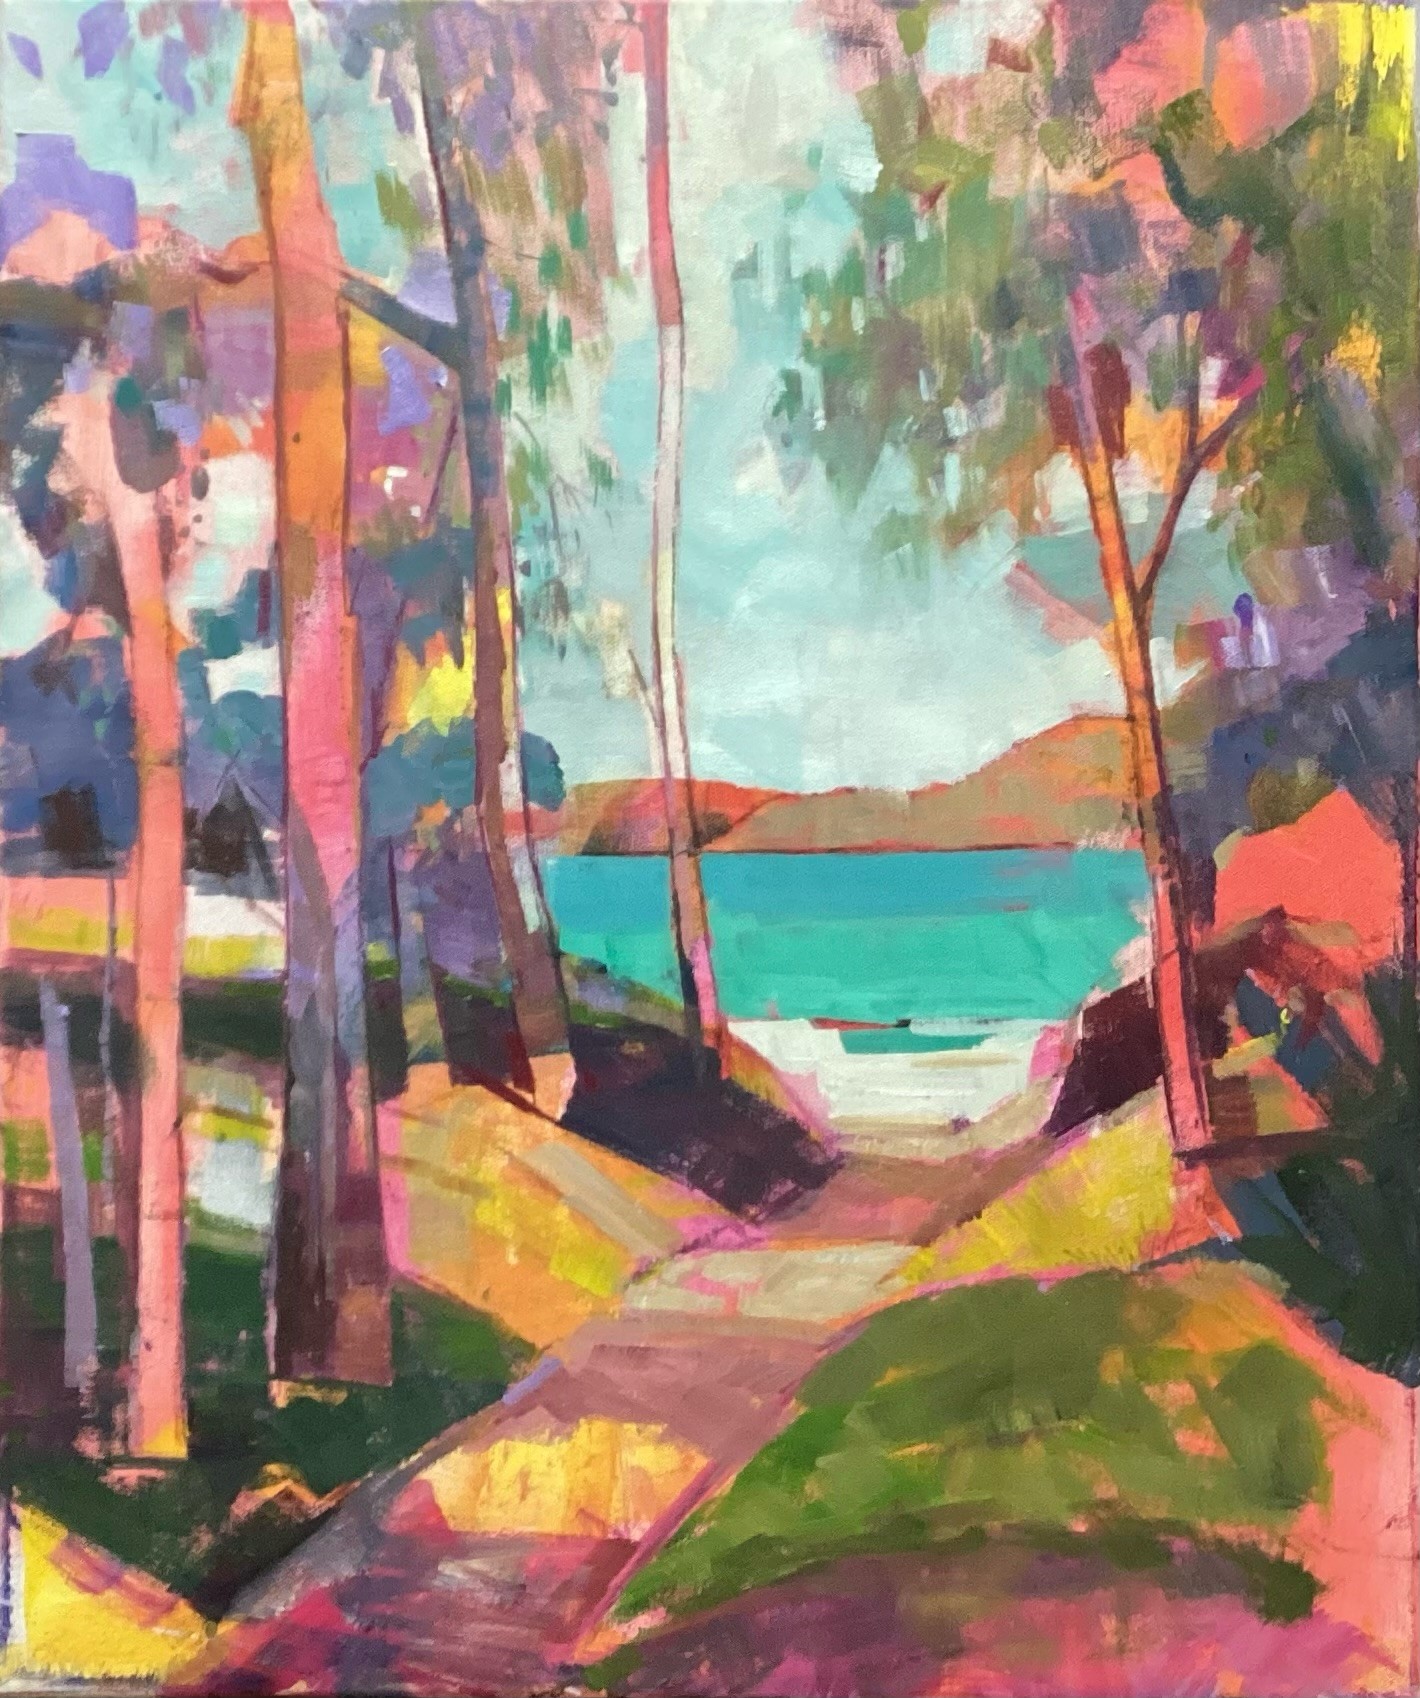 Nick Olsen 'Lakes Way Beach Track #2' oil on canvas 61 x 51cm $2,600